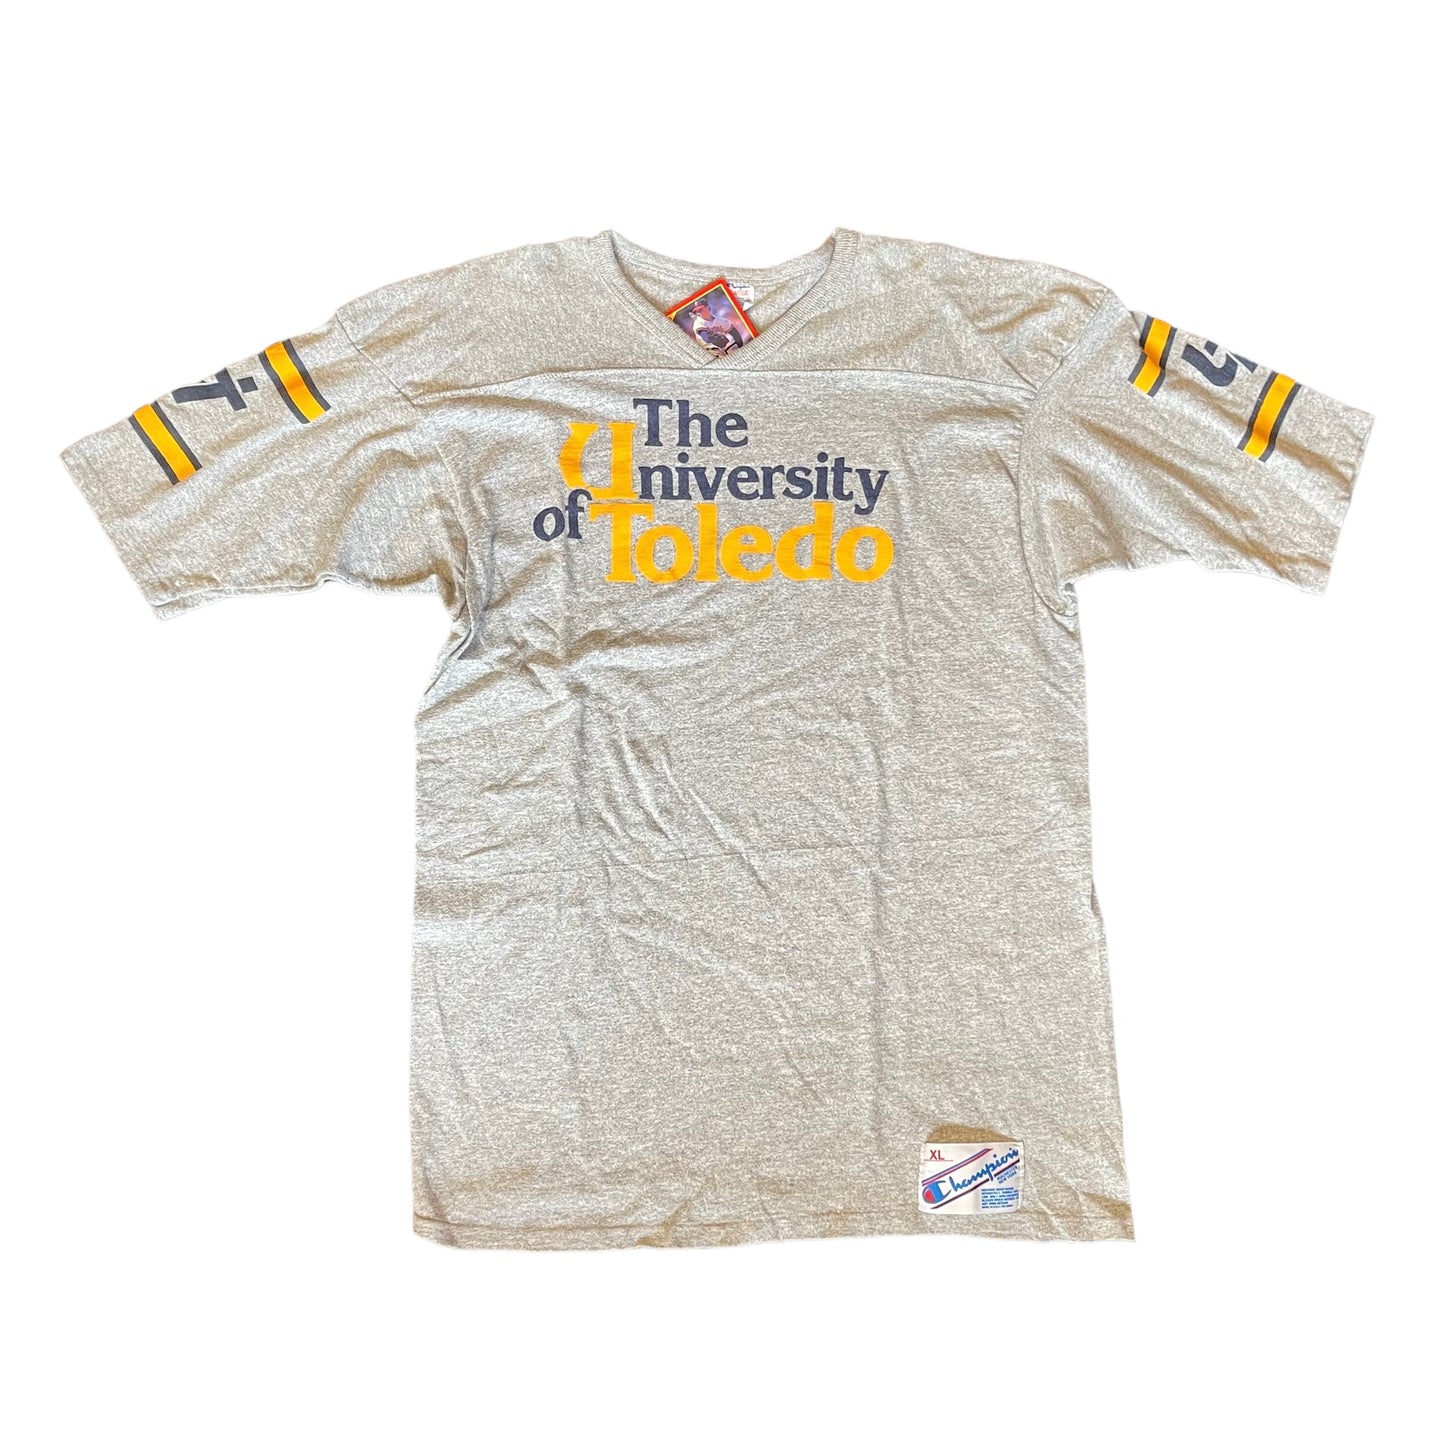 Vintage 1980s Champion University of Toledo Football Shirt